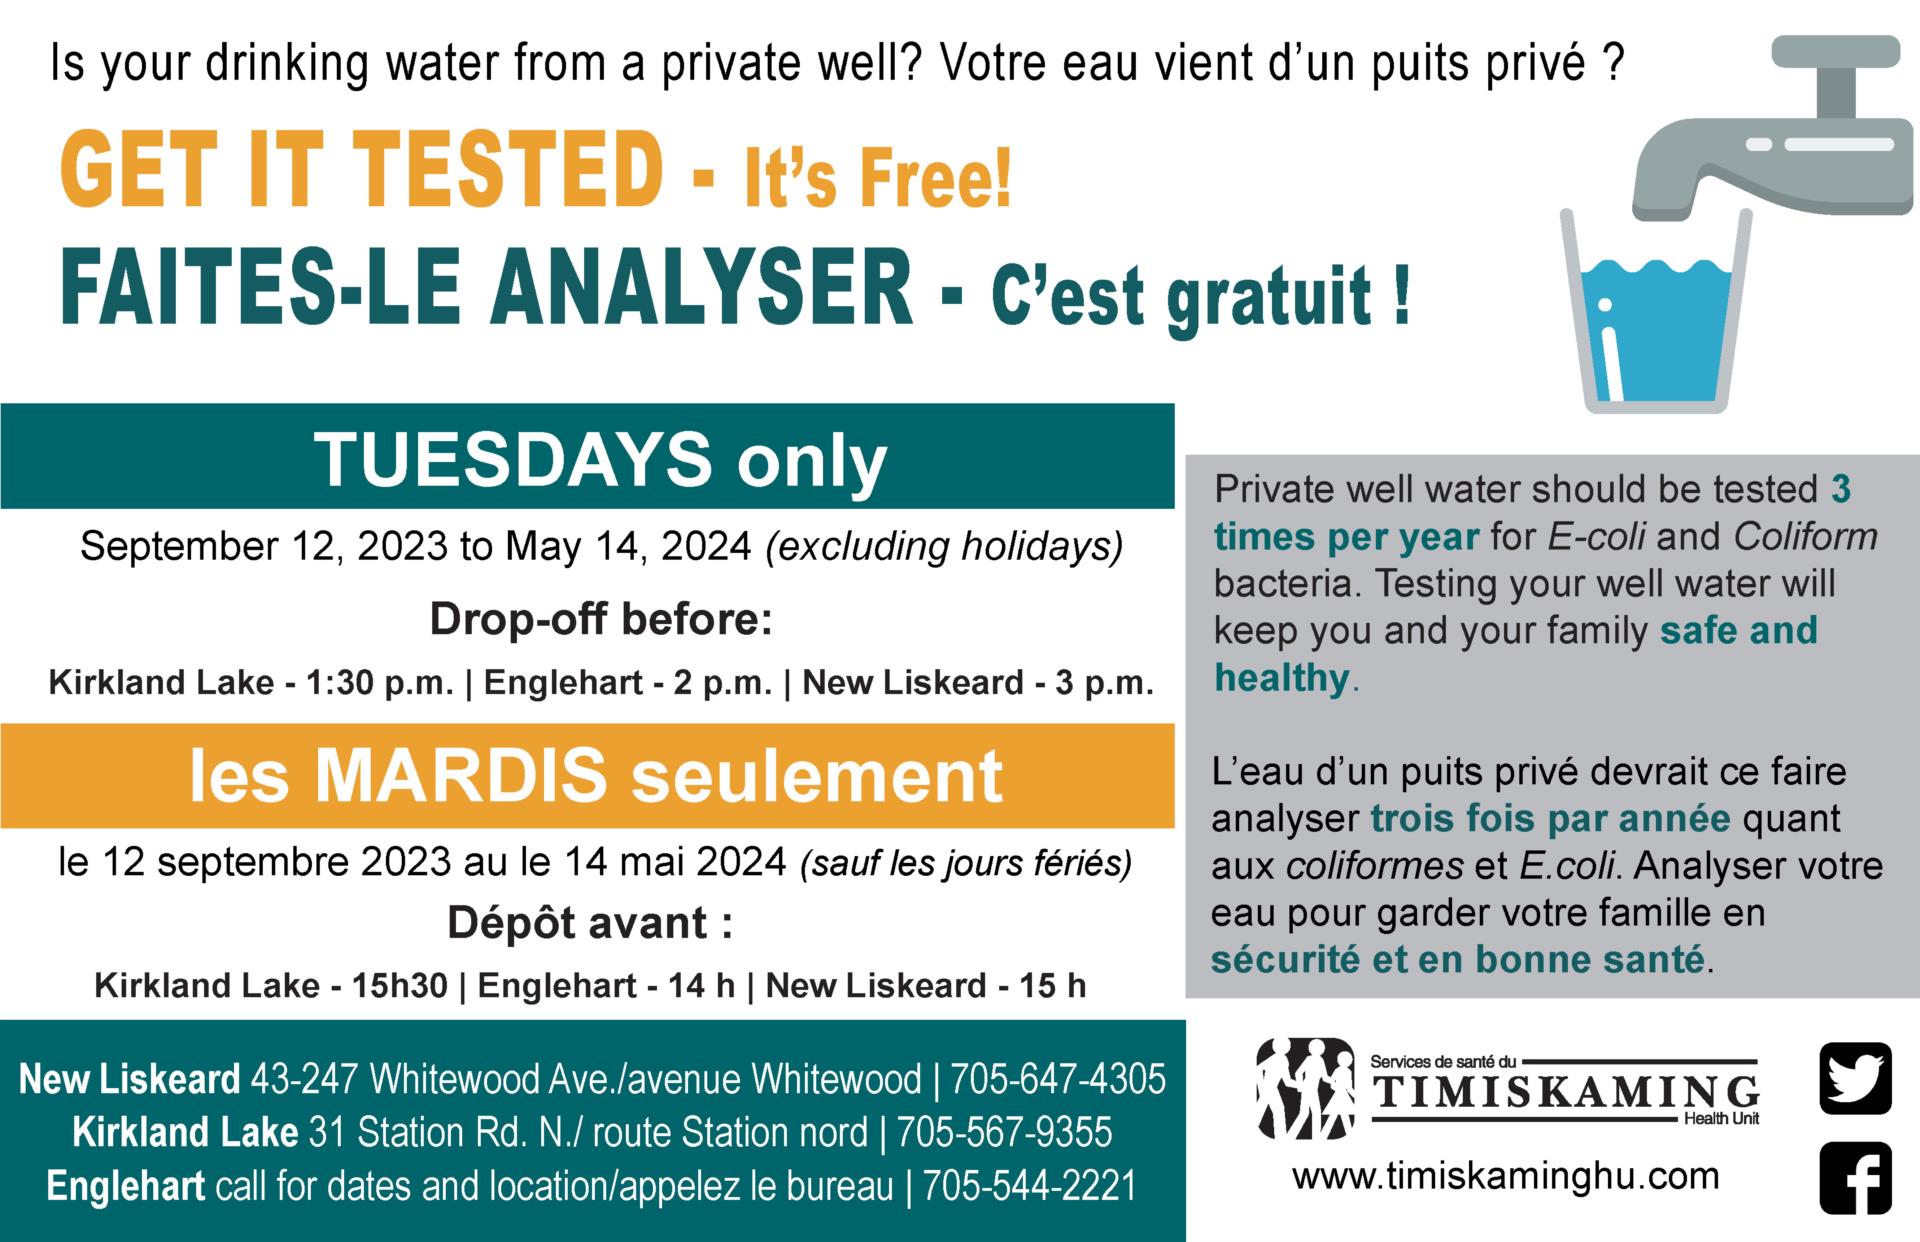 Well water testing - Tuesdays only in New Liskeard, Englehart and Kirkland Lake